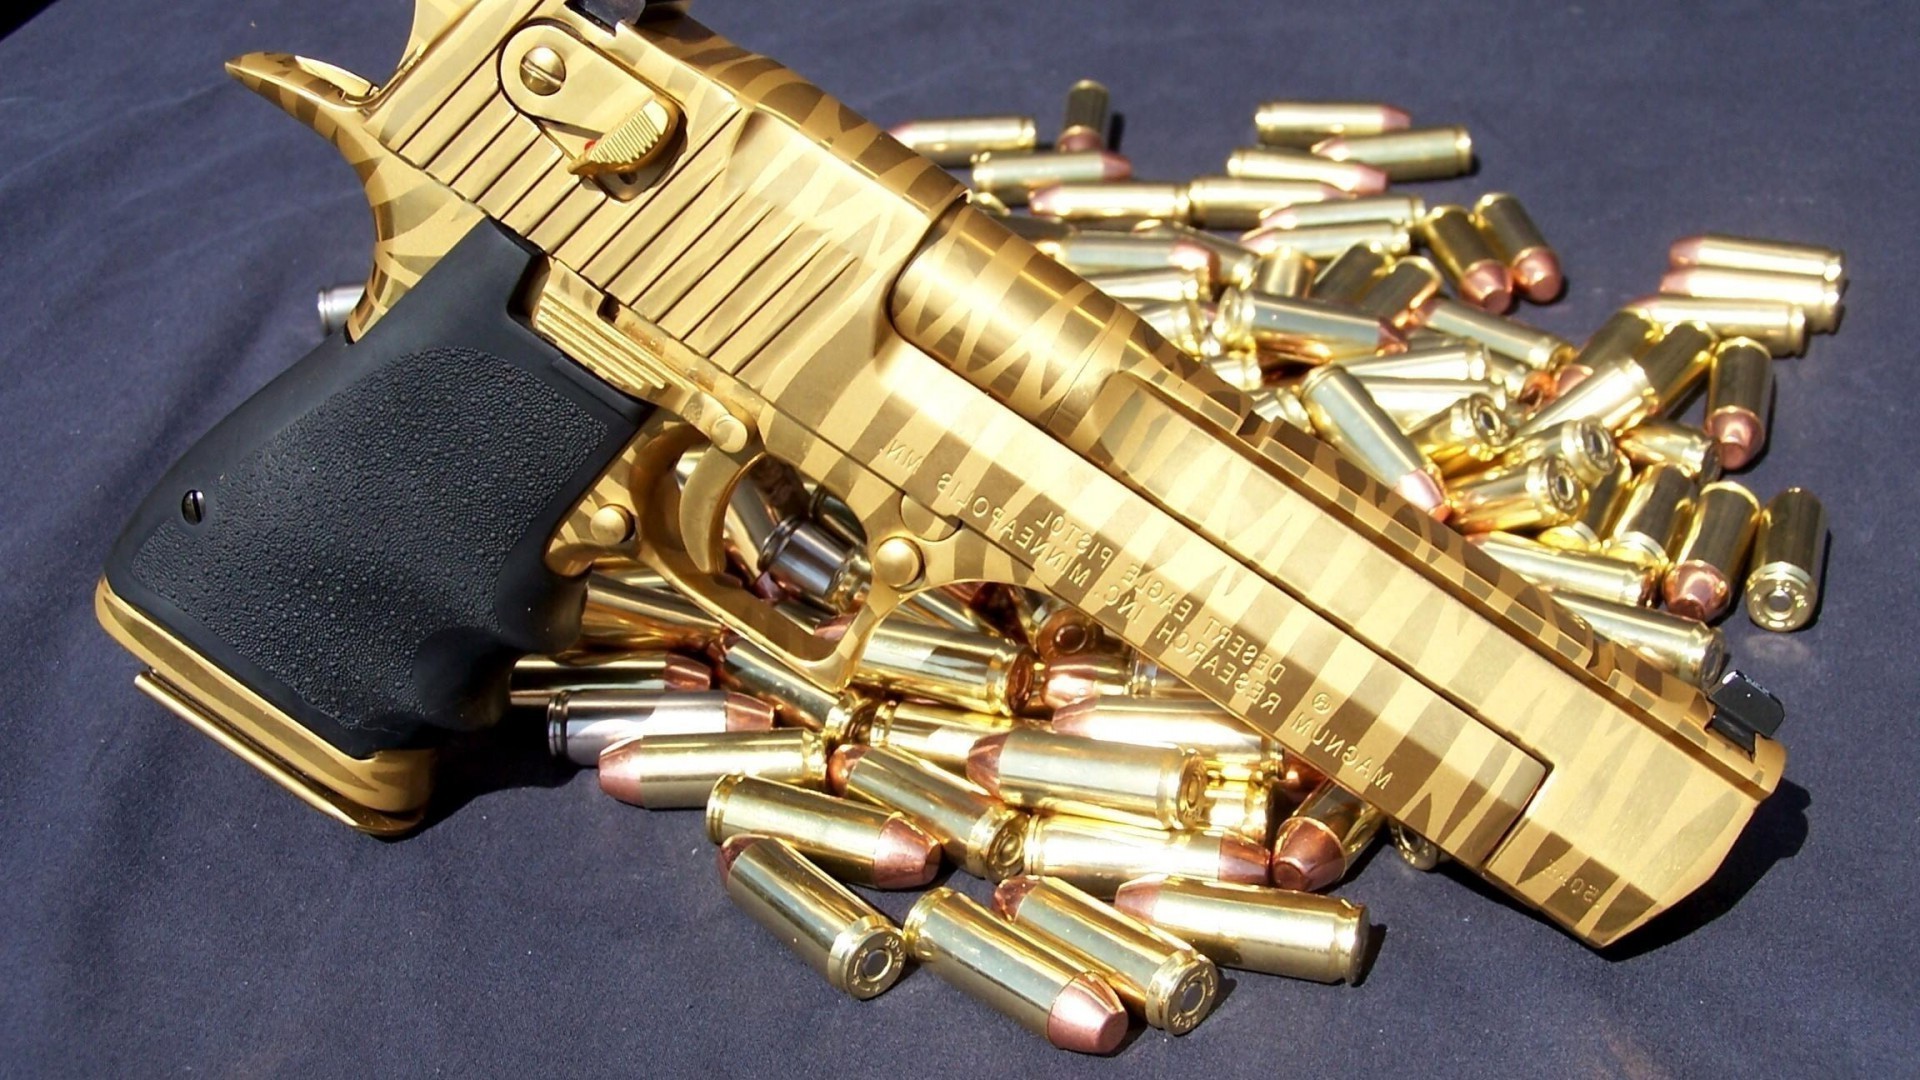 firearms gun weapon pistol offense brass ammunition bullet security rifle copper gauge cartridge gold law army war force police